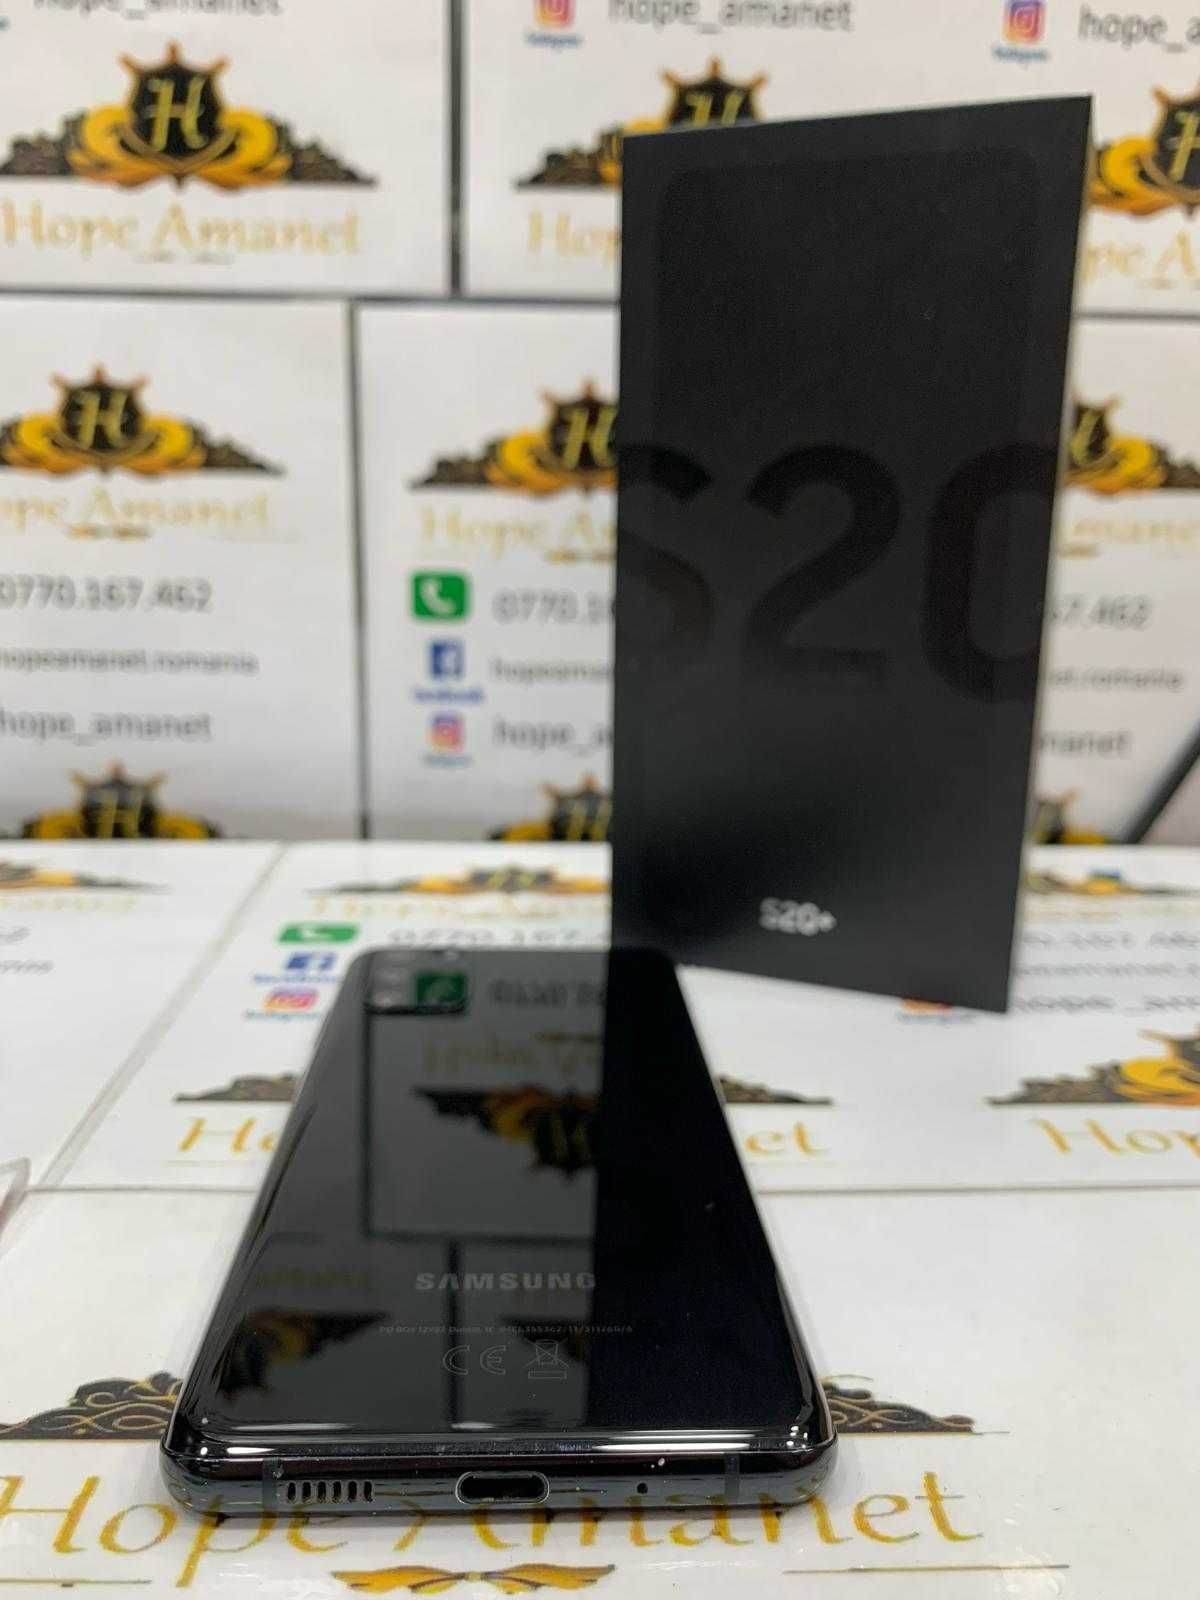 Hope Amanet P12 - Samsung S20 Plus / 128-8 GB / Full Box / Black